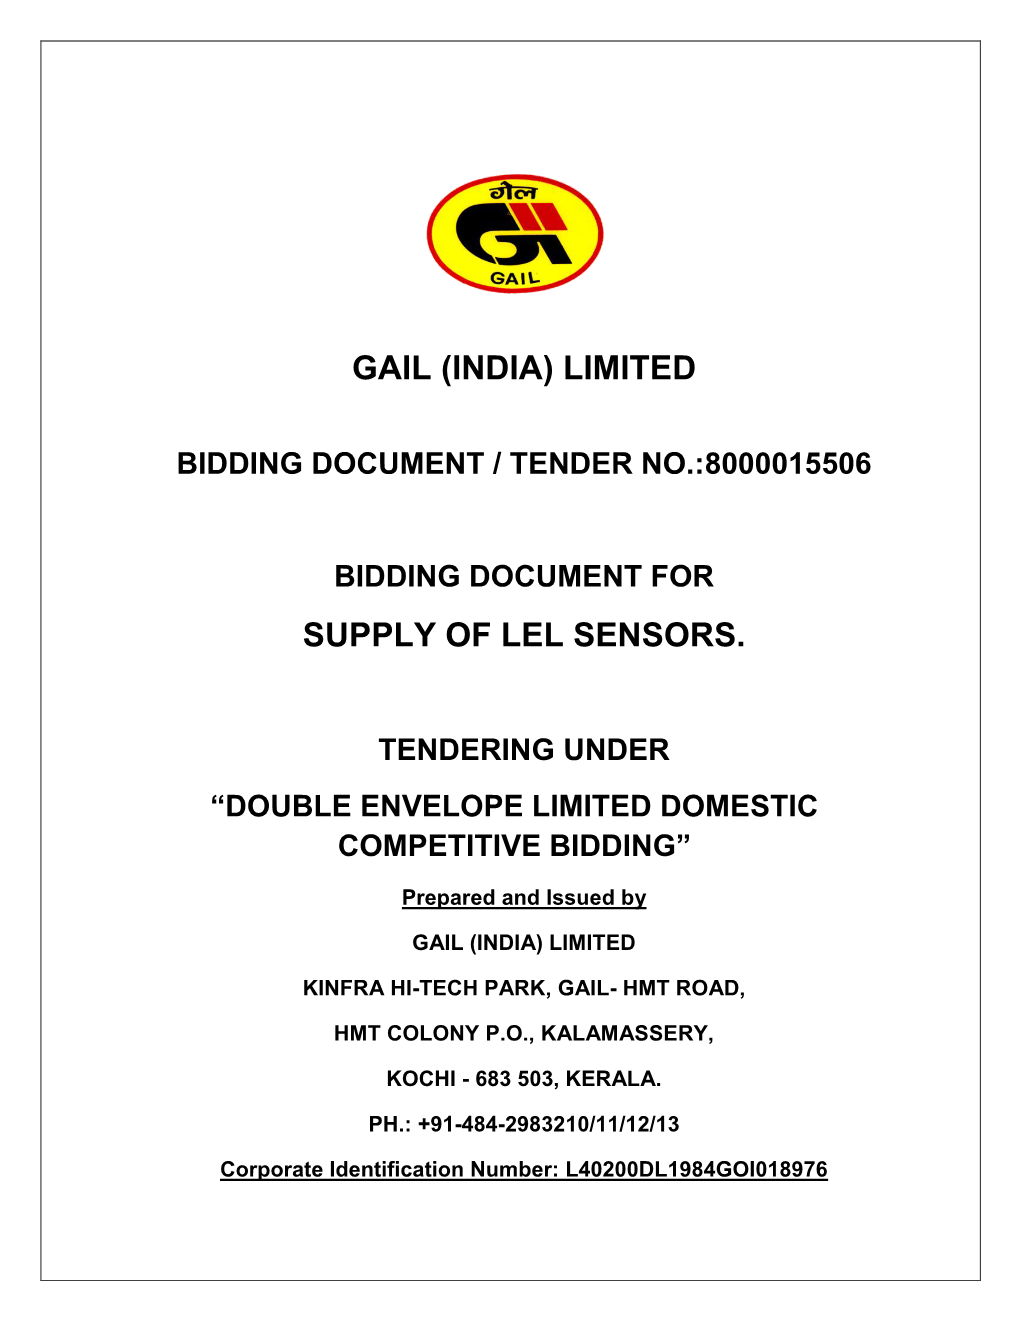 Gail (India) Limited Supply of Lel Sensors